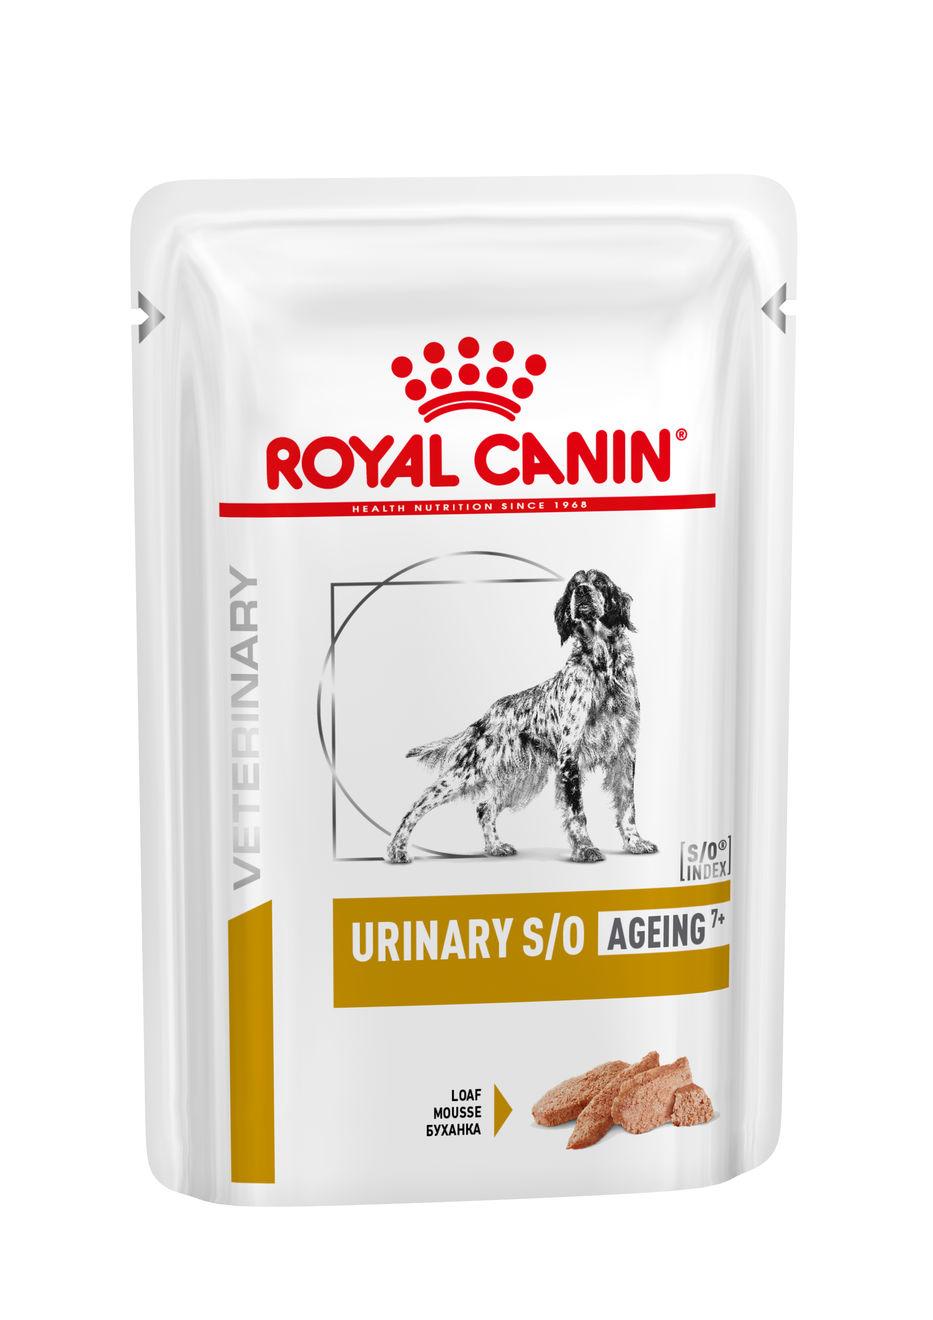 Royal canin veterinary health nutrition dog  urinary s/o age pouch loaf kapsa 85g